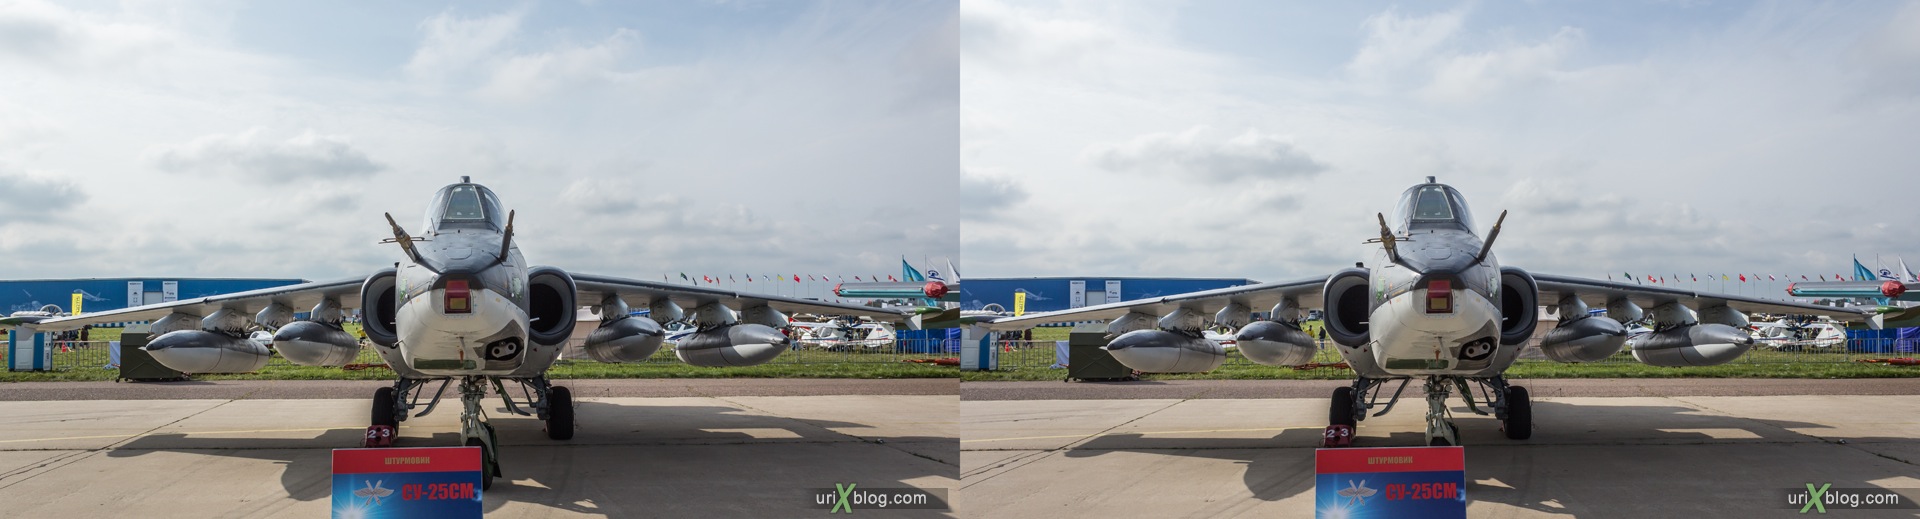 2013, Su-25SM, MAKS, International Aviation and Space Salon, Russia, Soviet, USSR, Ramenskoye airfield, airplane, 3D, stereo pair, cross-eyed, crossview, cross view stereo pair, stereoscopic